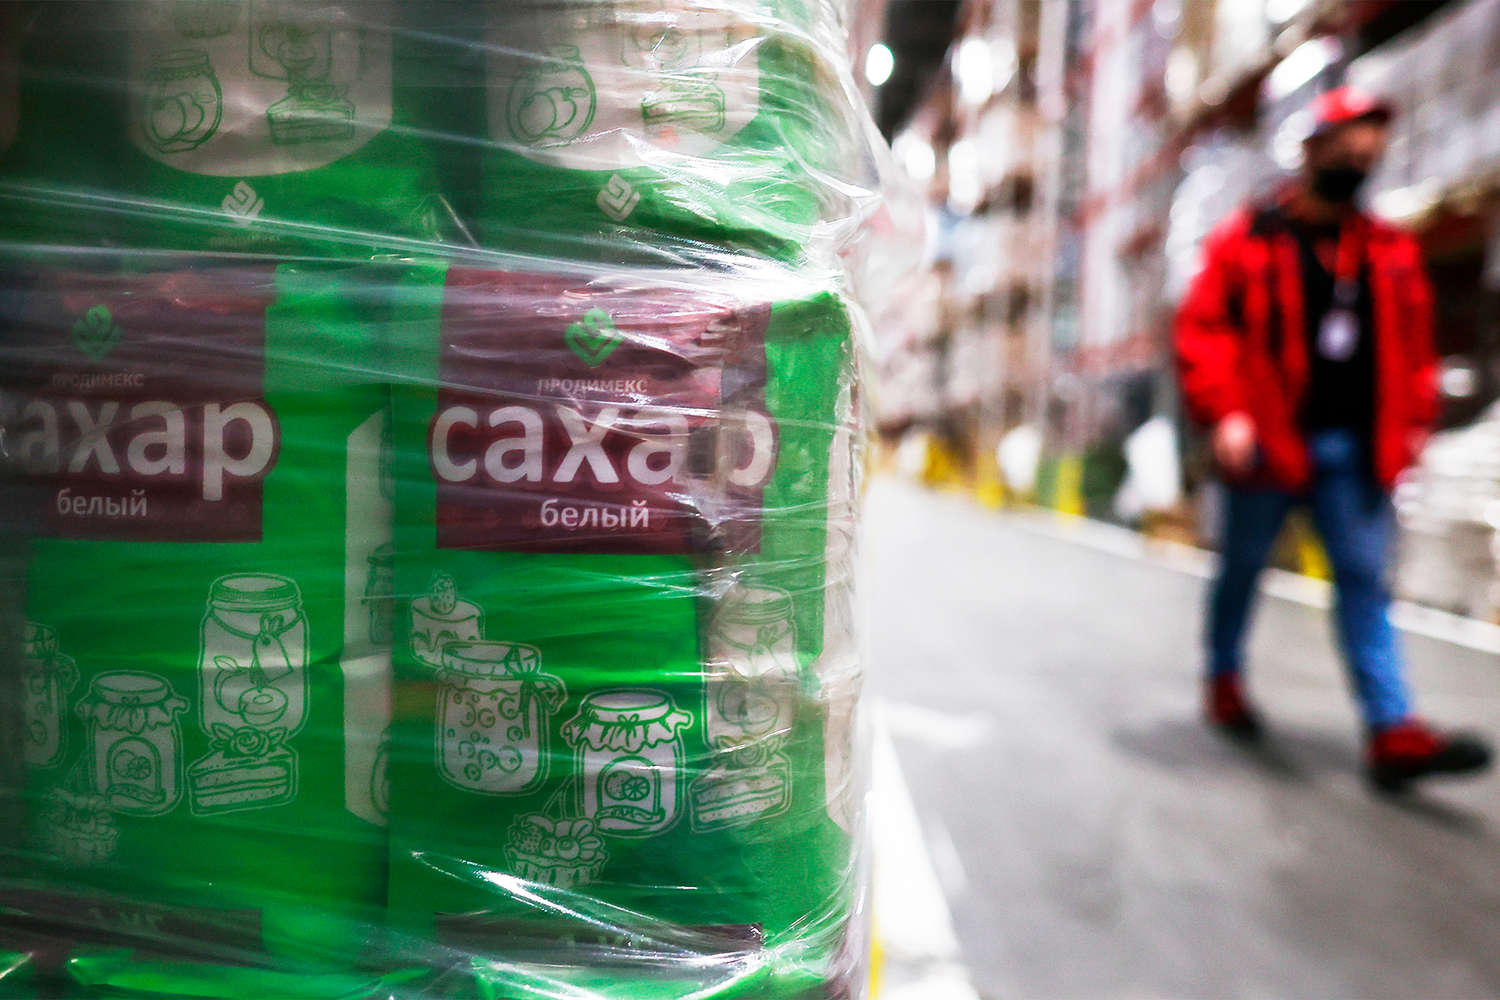 ФАС признала производителя сахара «Продимекс» виновным в ажиотаже на продукт в 2022 году